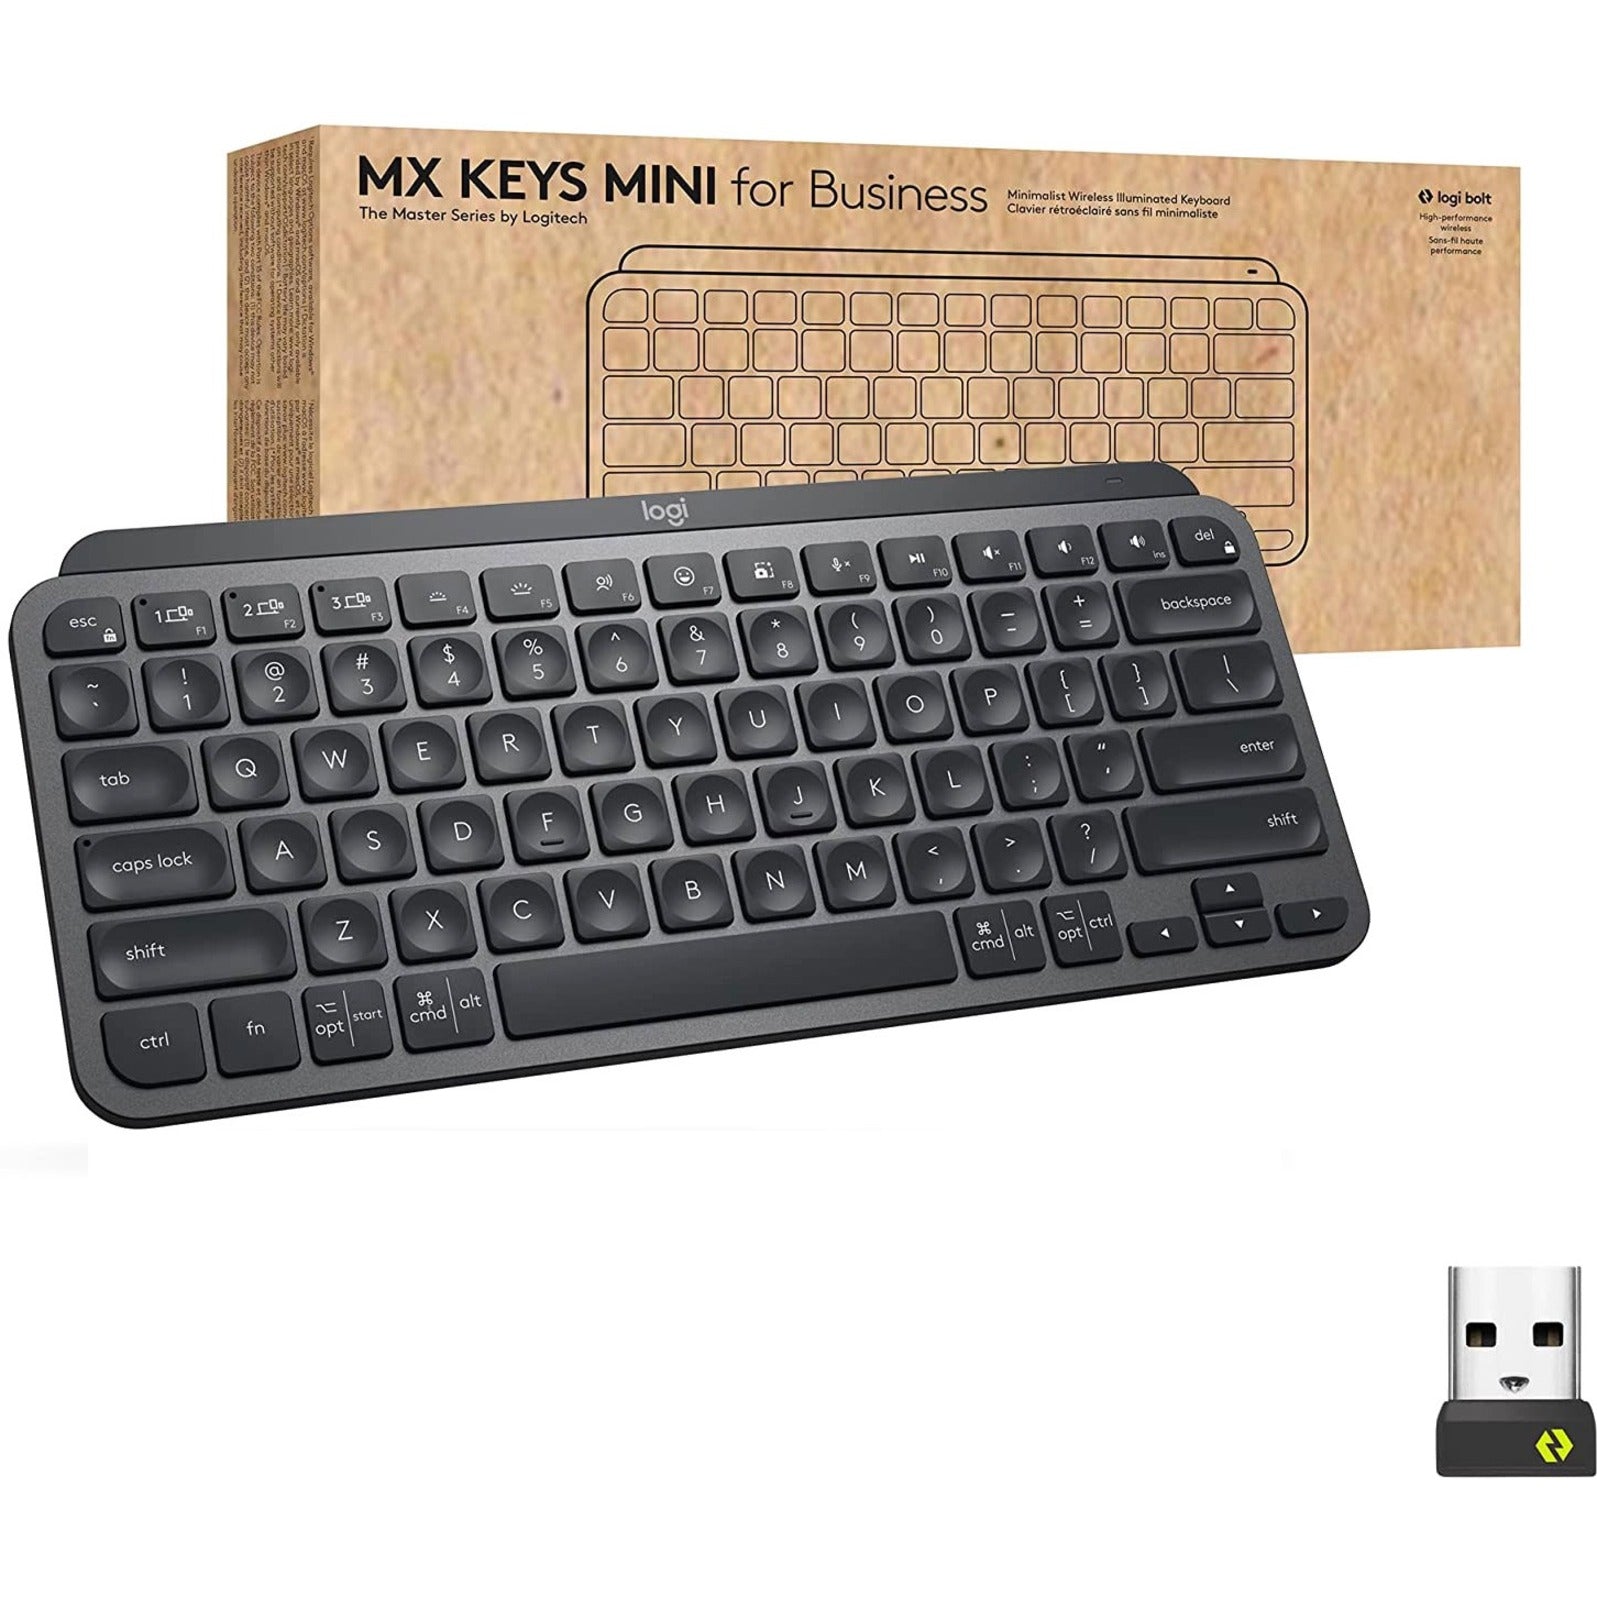 G Keyboard Carrying Case Replacement for Logitech MX Keys Keyboard